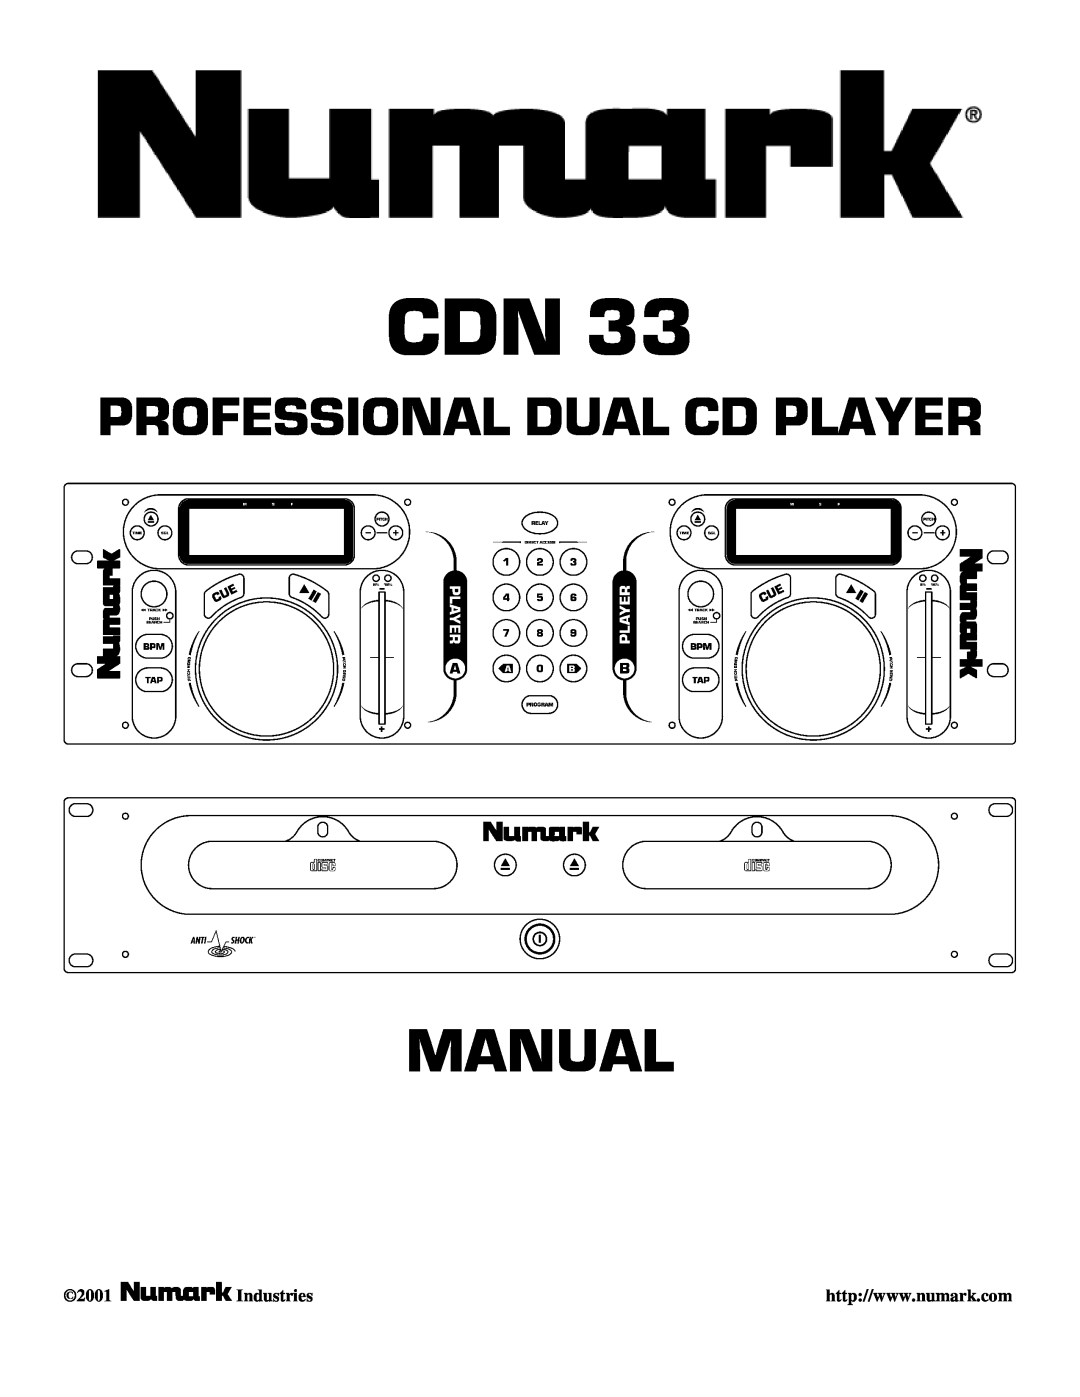 Numark Industries CDN 33 manual Manual, Professional Dual Cd Player, Industries, 2001 